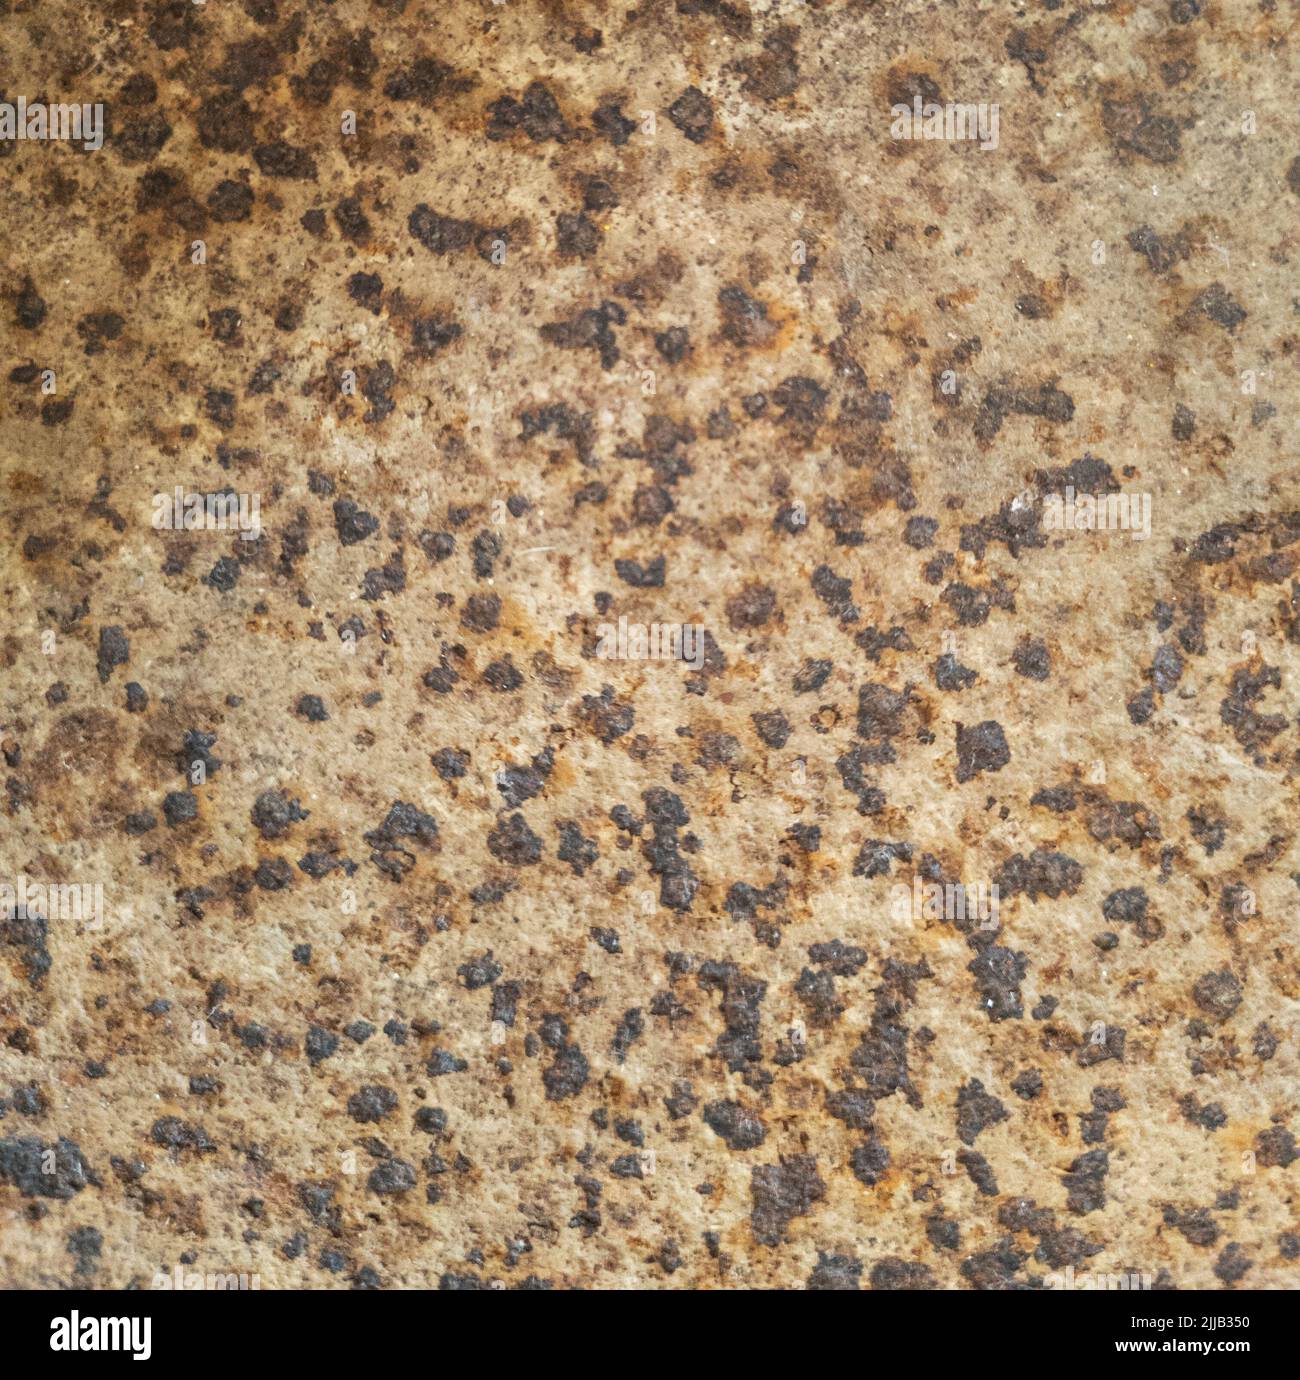 Rust on metal texture. Pattern dark black rusty spots on brown metal surface Stock Photo